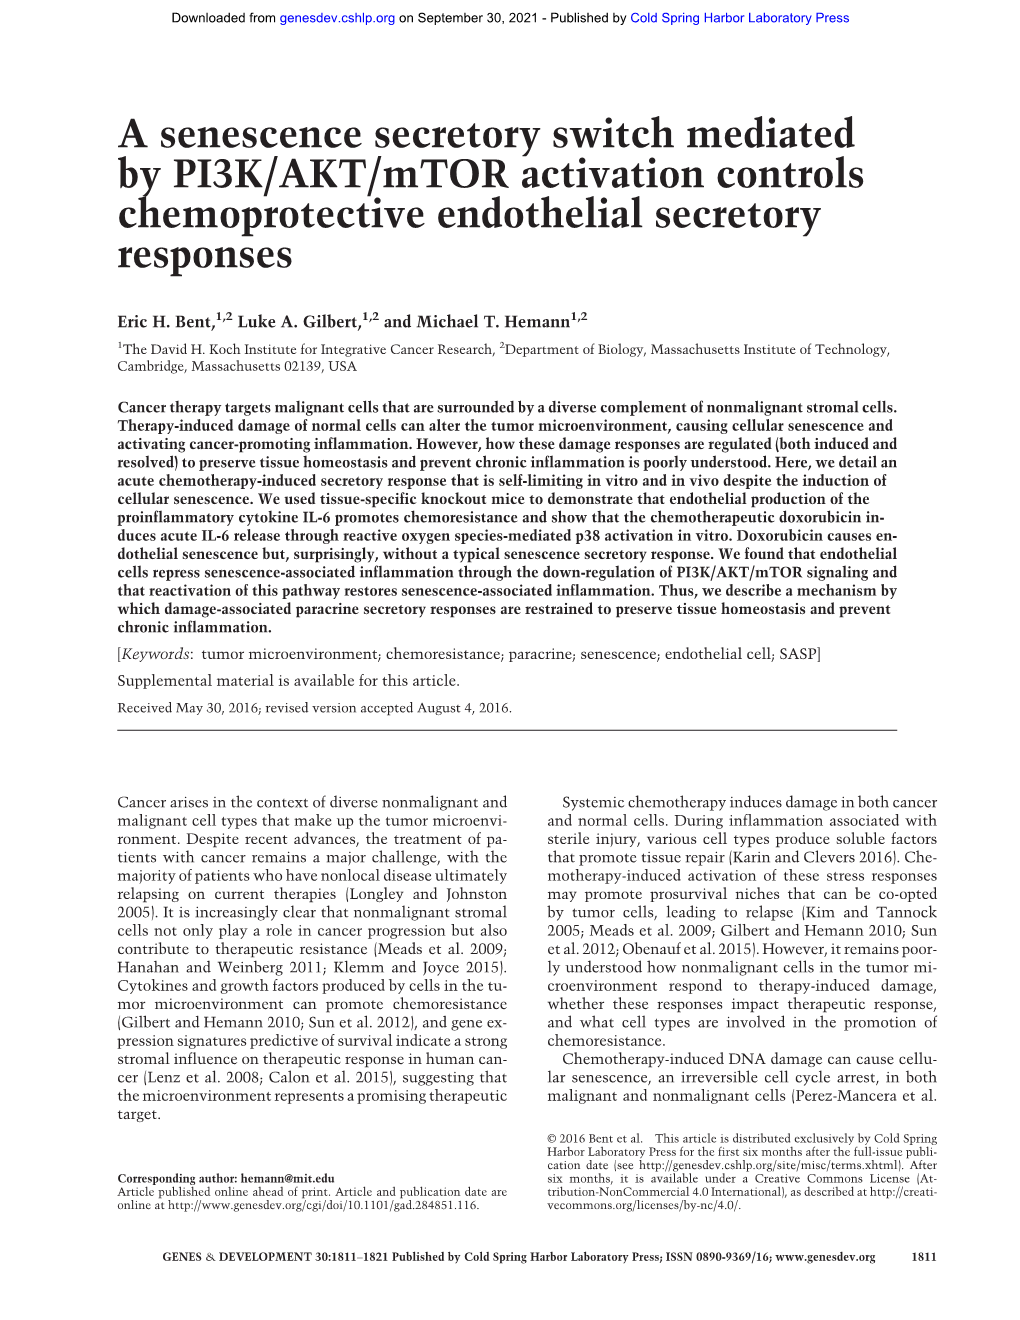 A Senescence Secretory Switch Mediated by PI3K/AKT/Mtor Activation Controls Chemoprotective Endothelial Secretory Responses